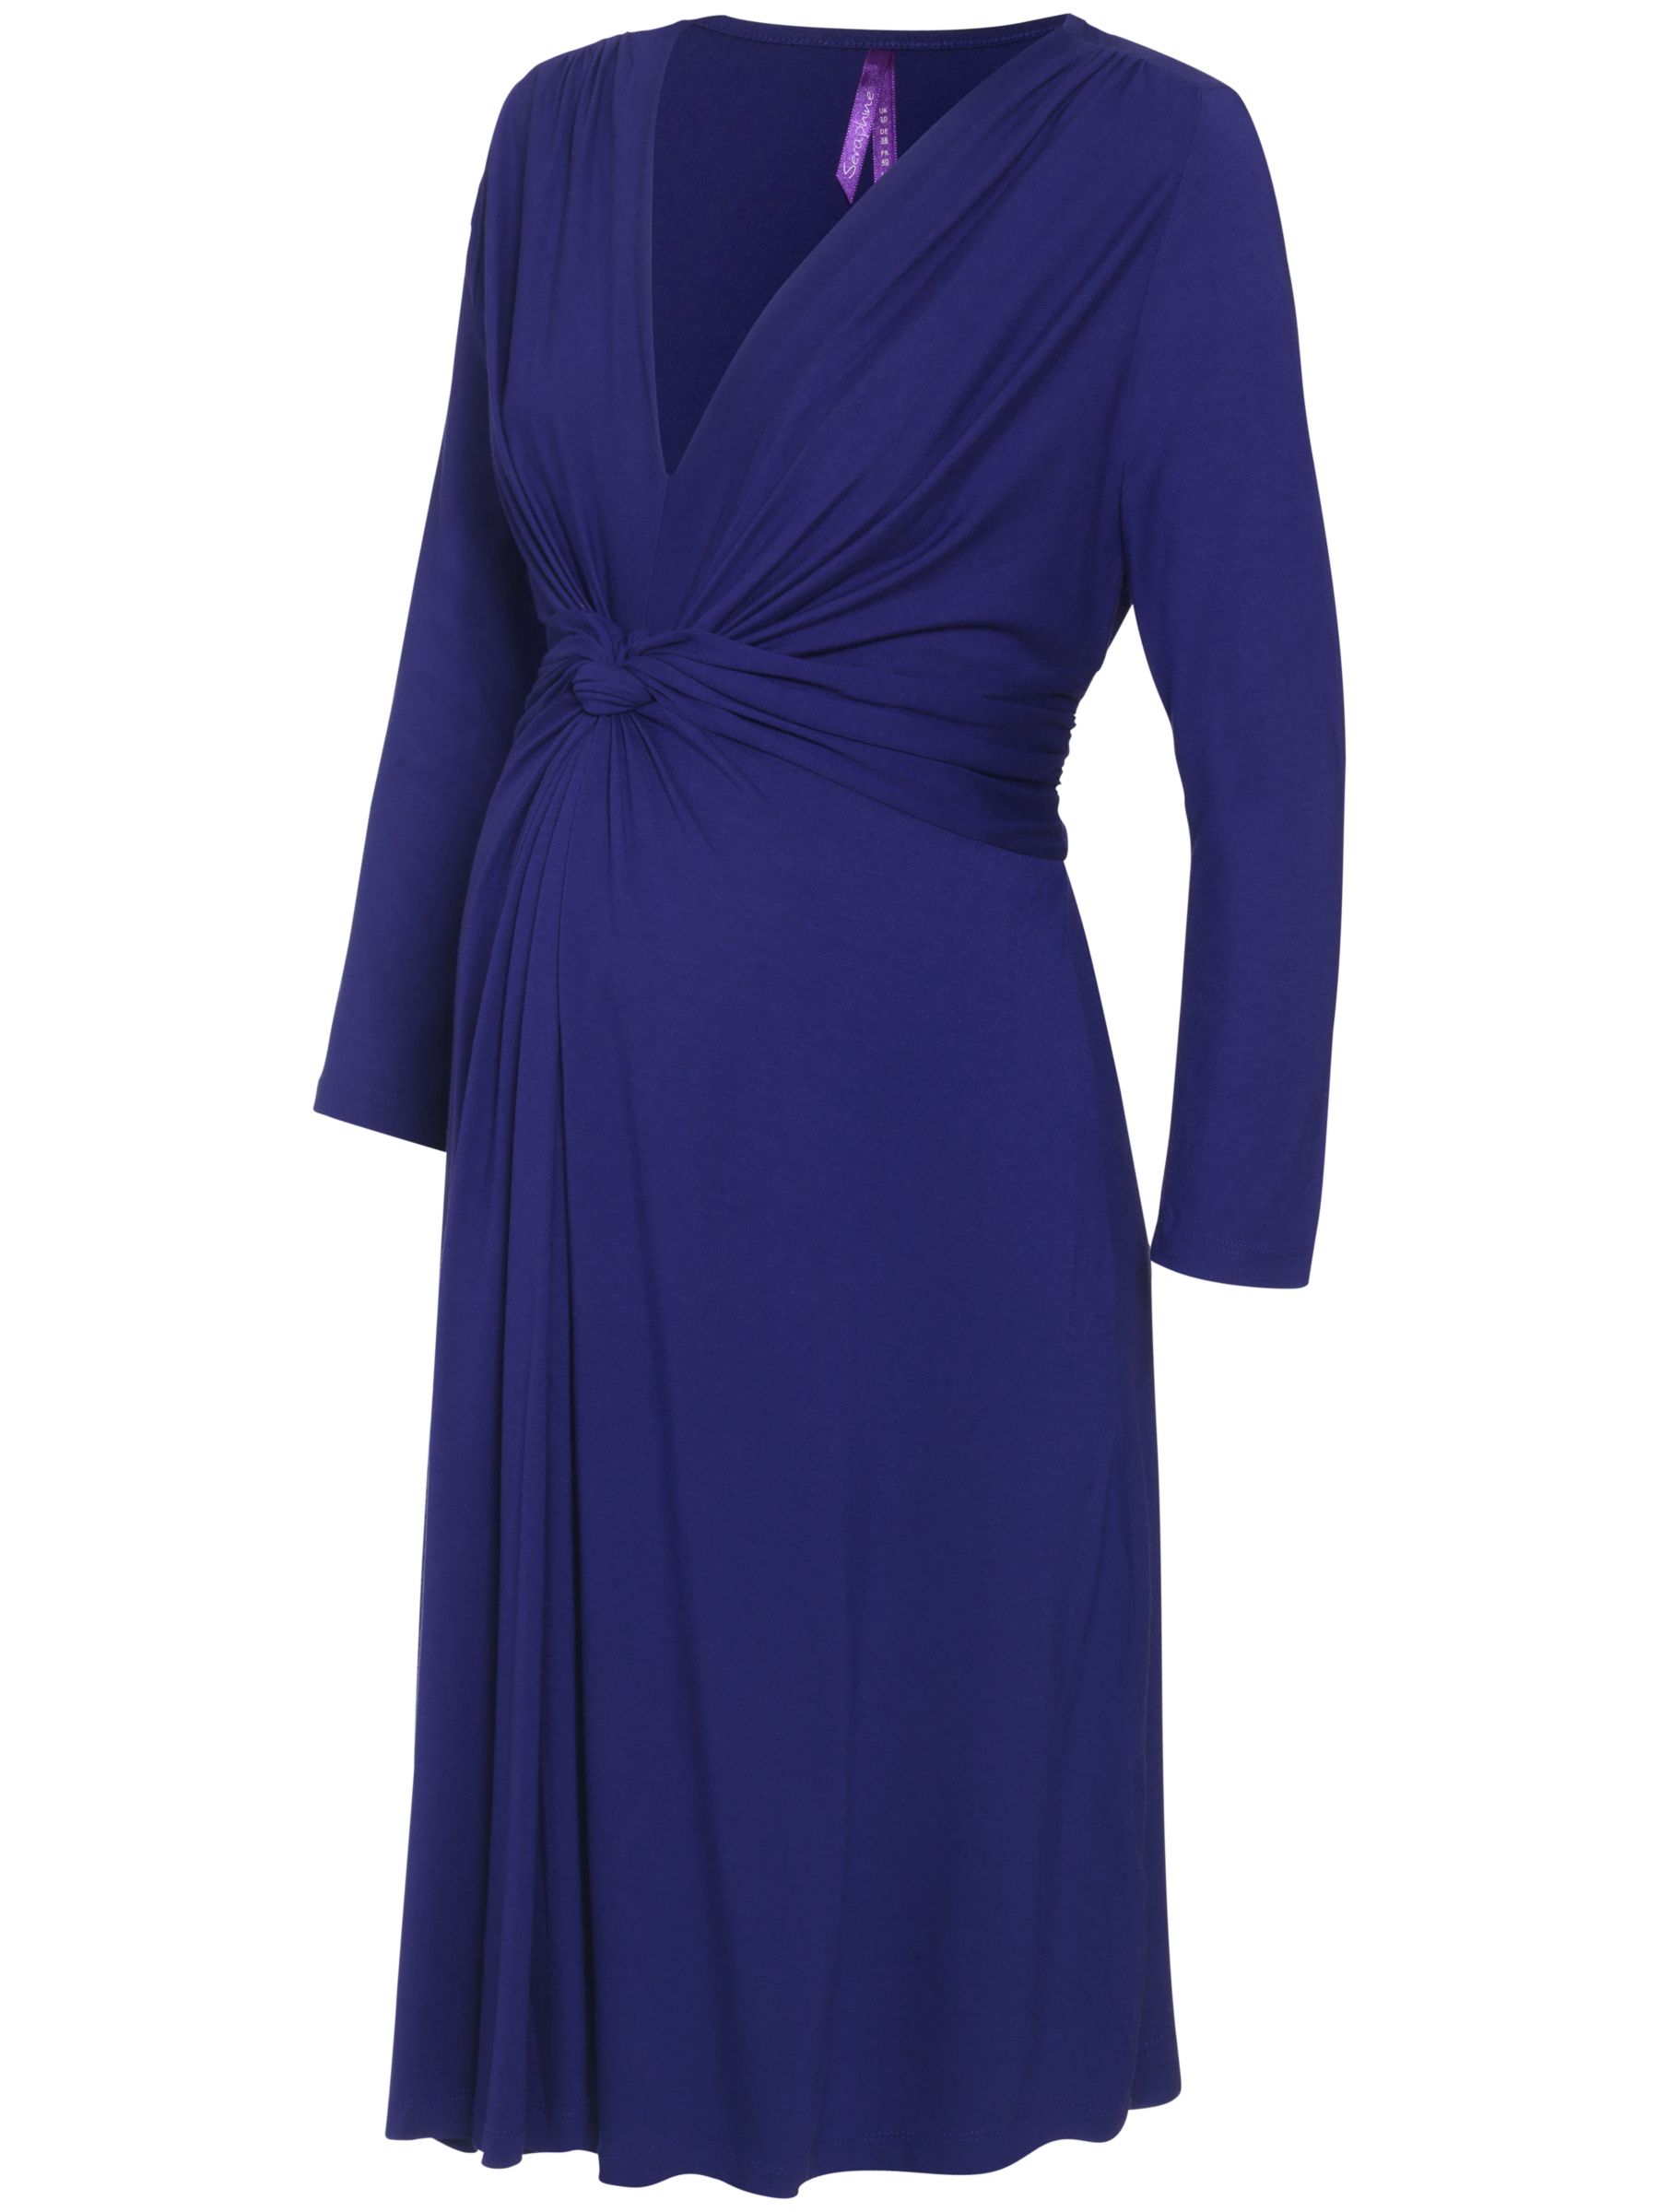 Seraphine Jolene Maternity Dress, Royal Blue